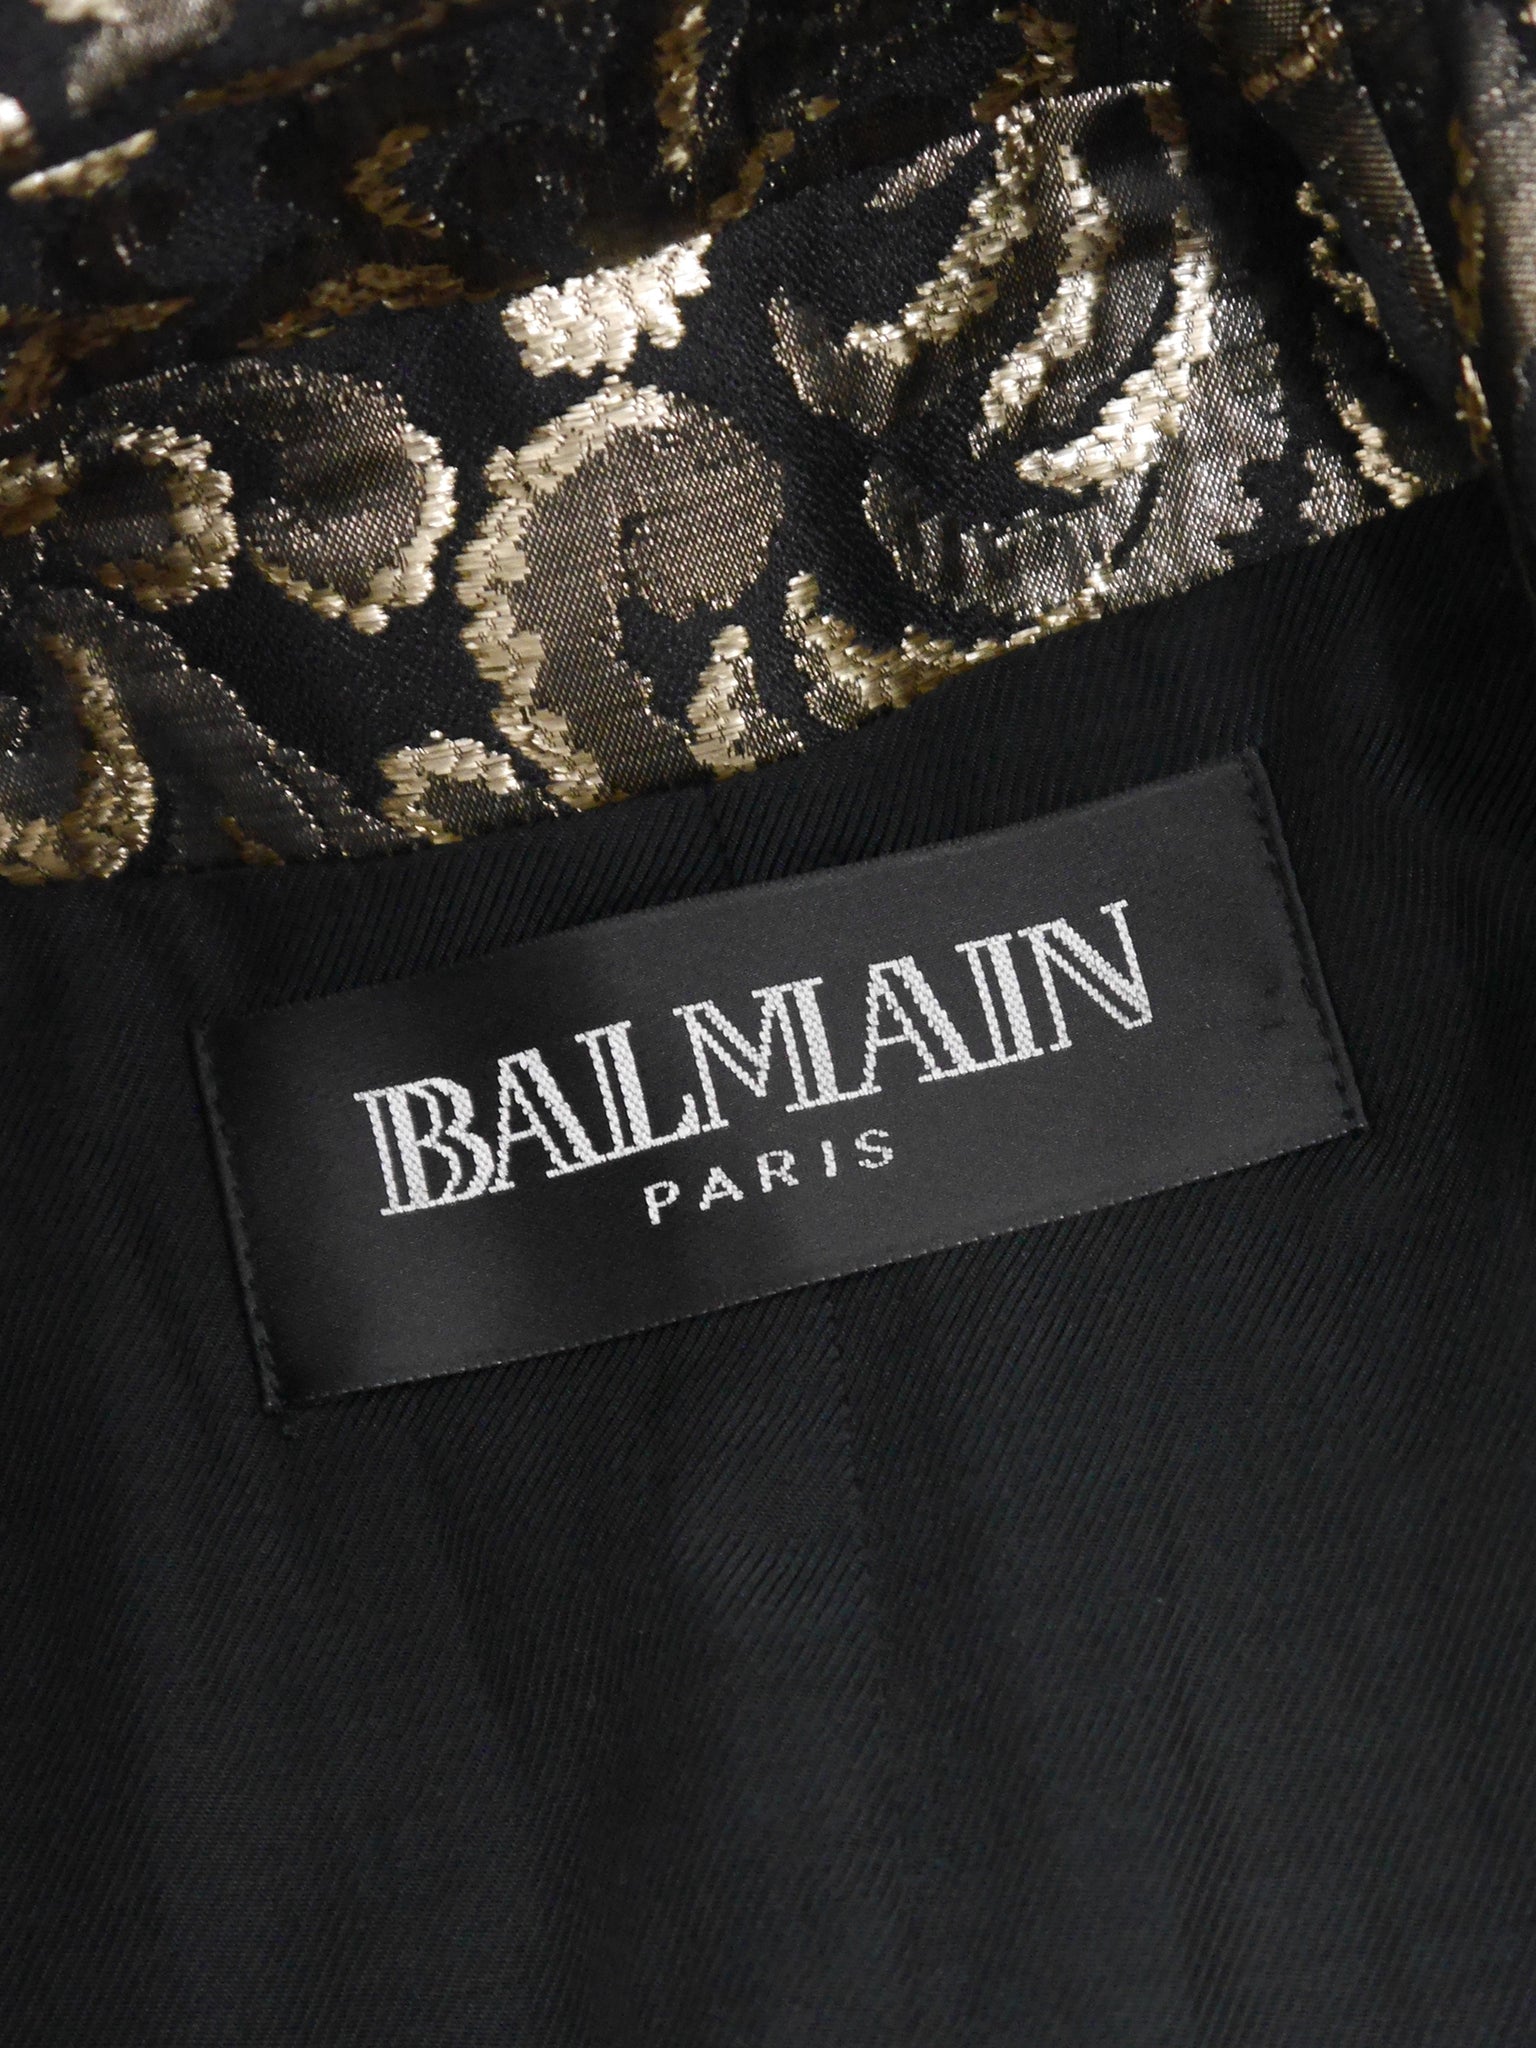 BALMAIN by Christophe Decarnin Fall 2010 Vintage Gold Brocade Evening Jacket Size S-M